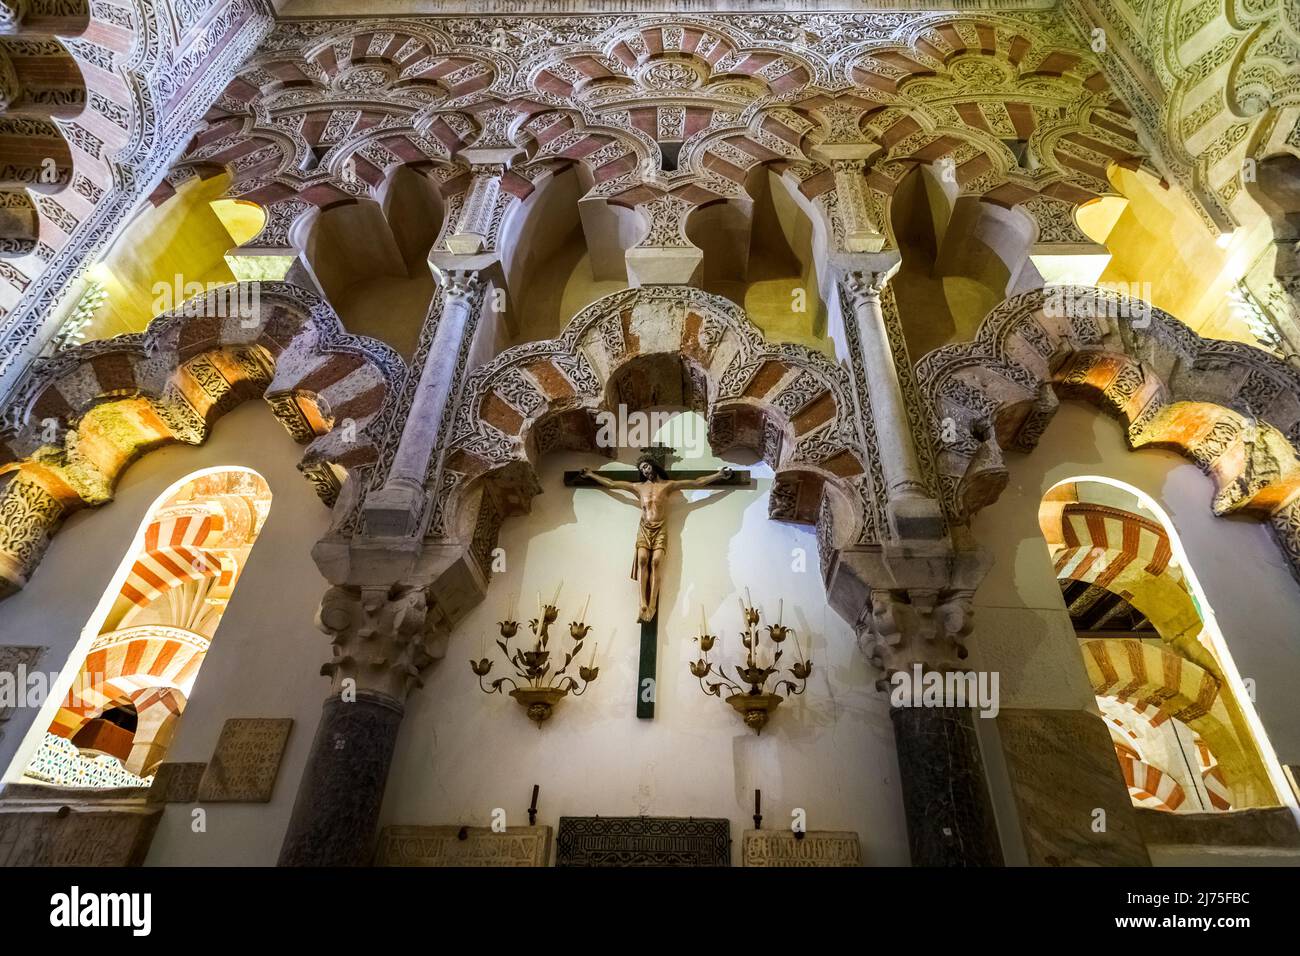 Kapelle von Villaviciosa (Capilla de Villaviciosa) in der Mezquita-Kathedrale (große Moschee von Cordoba) - Cordoba, Spanien Stockfoto